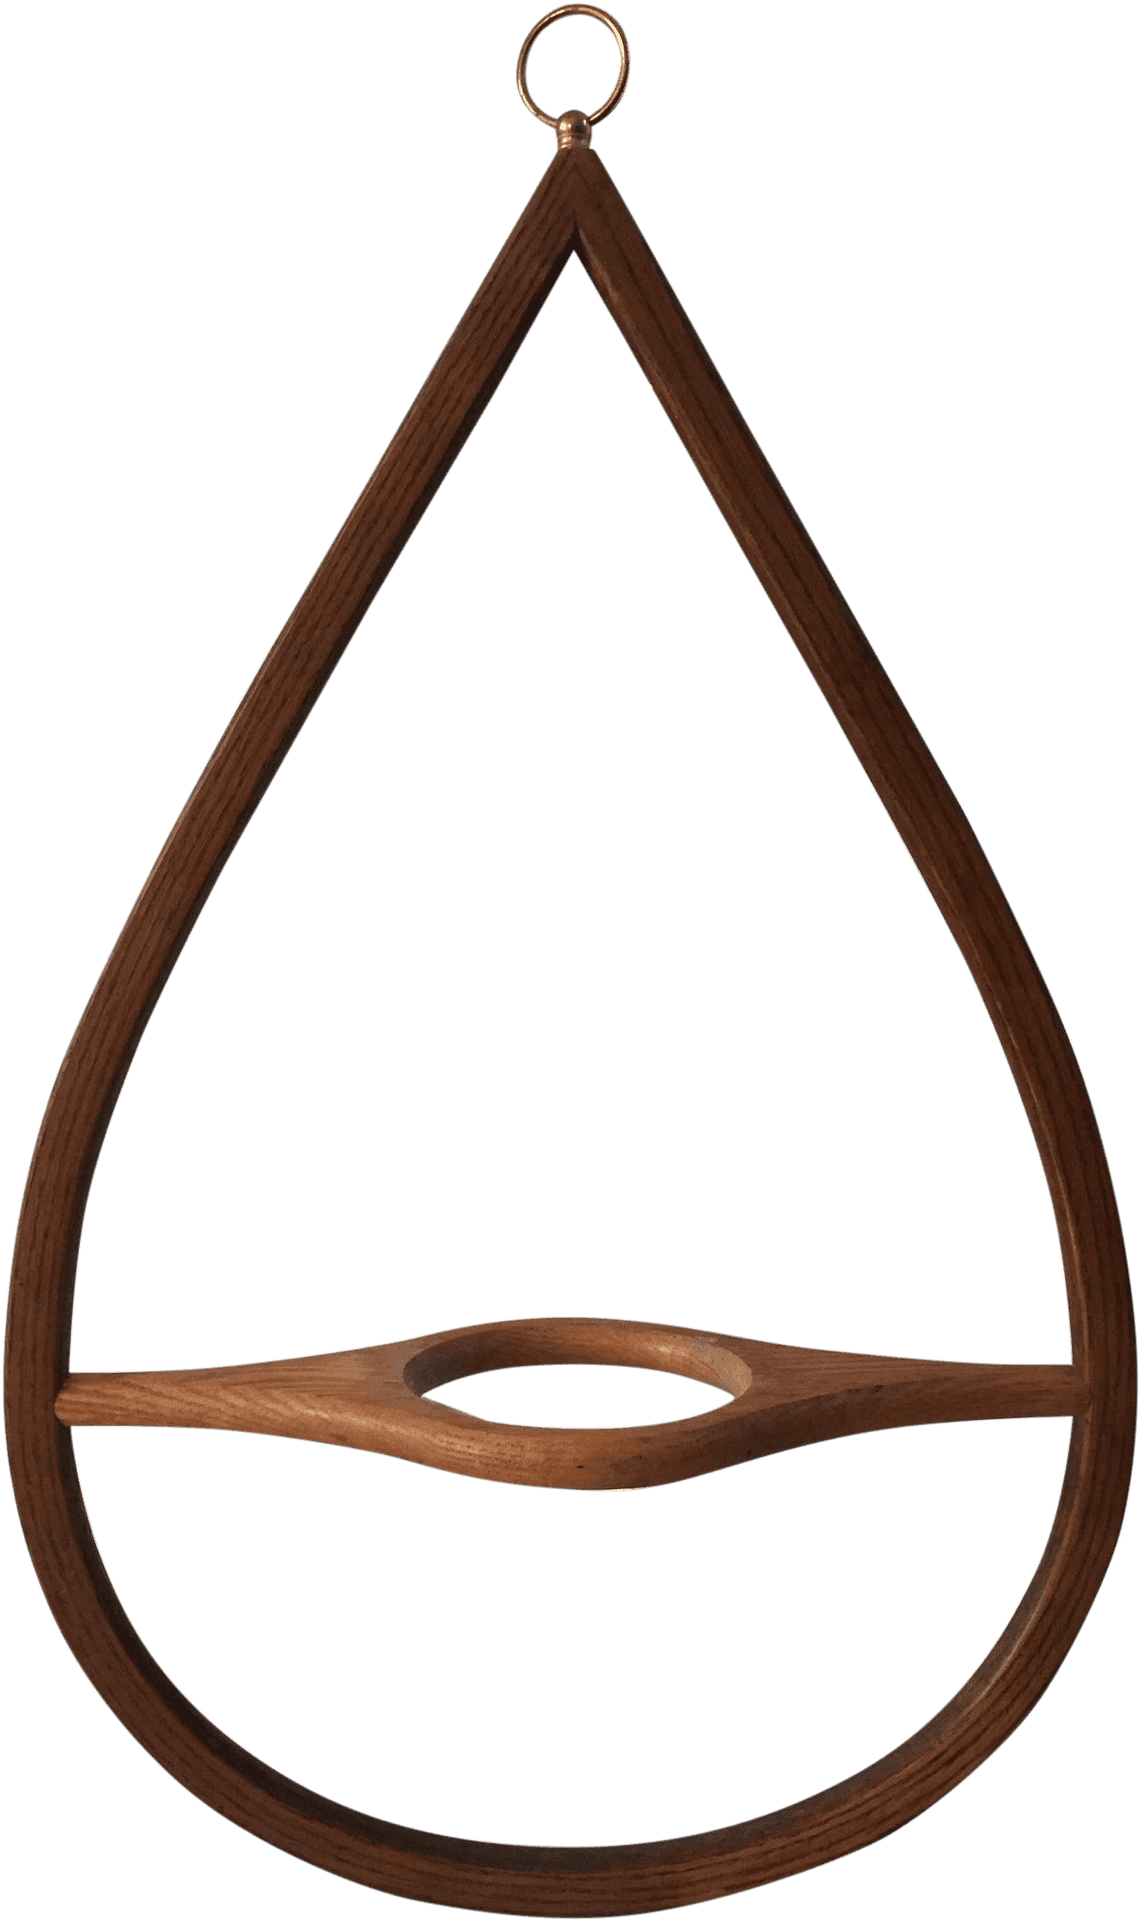 Wooden Teardrop Swing Chair PNG image